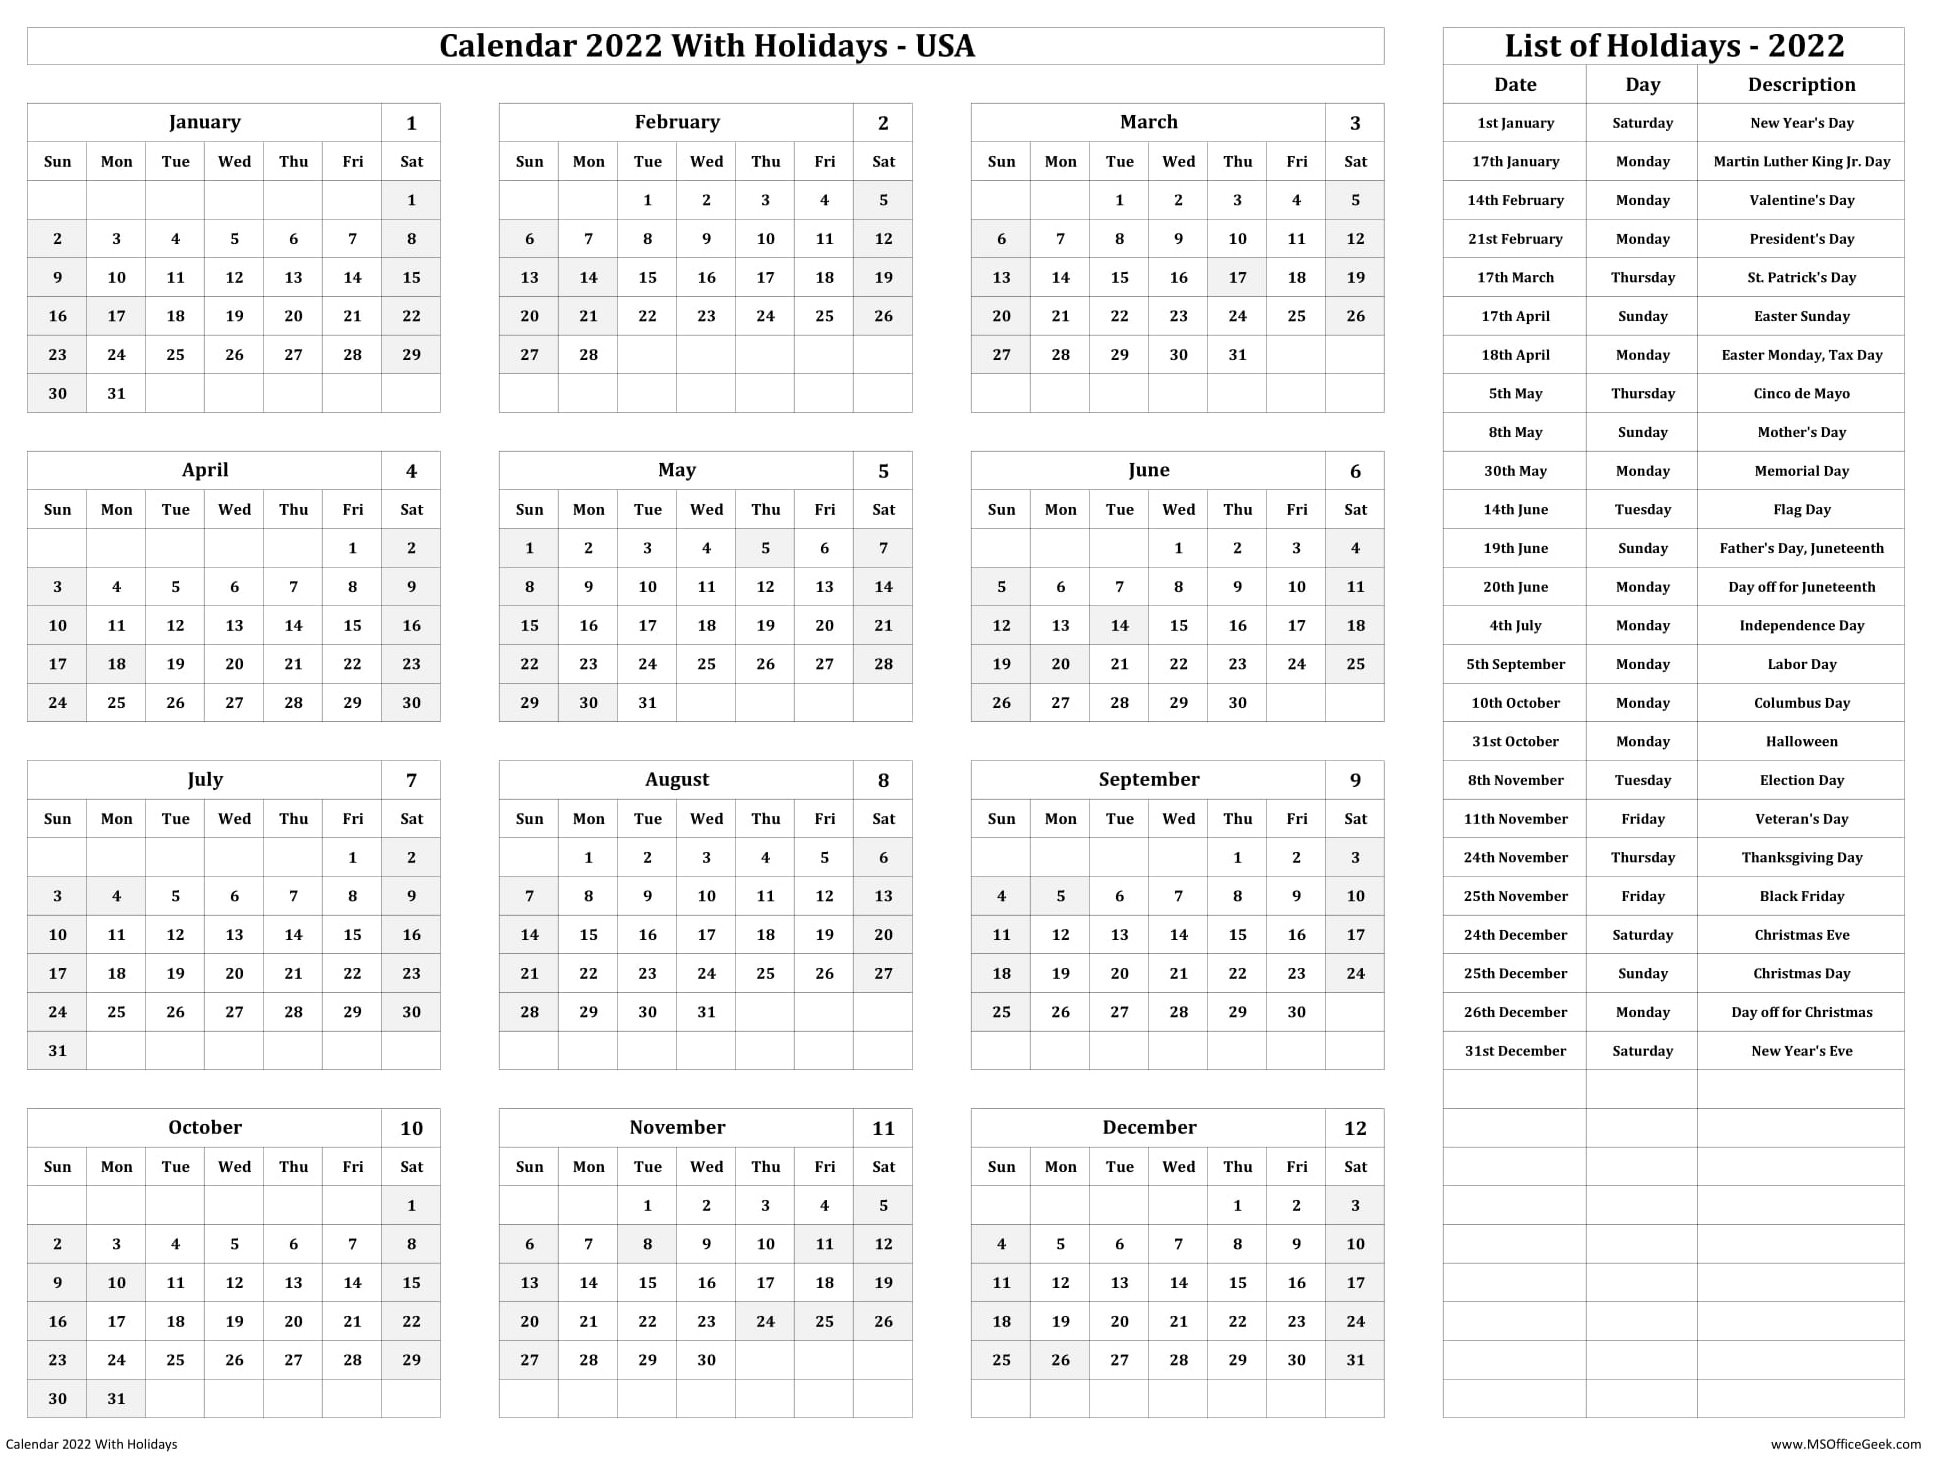 Calendar 2022 With US Holidays